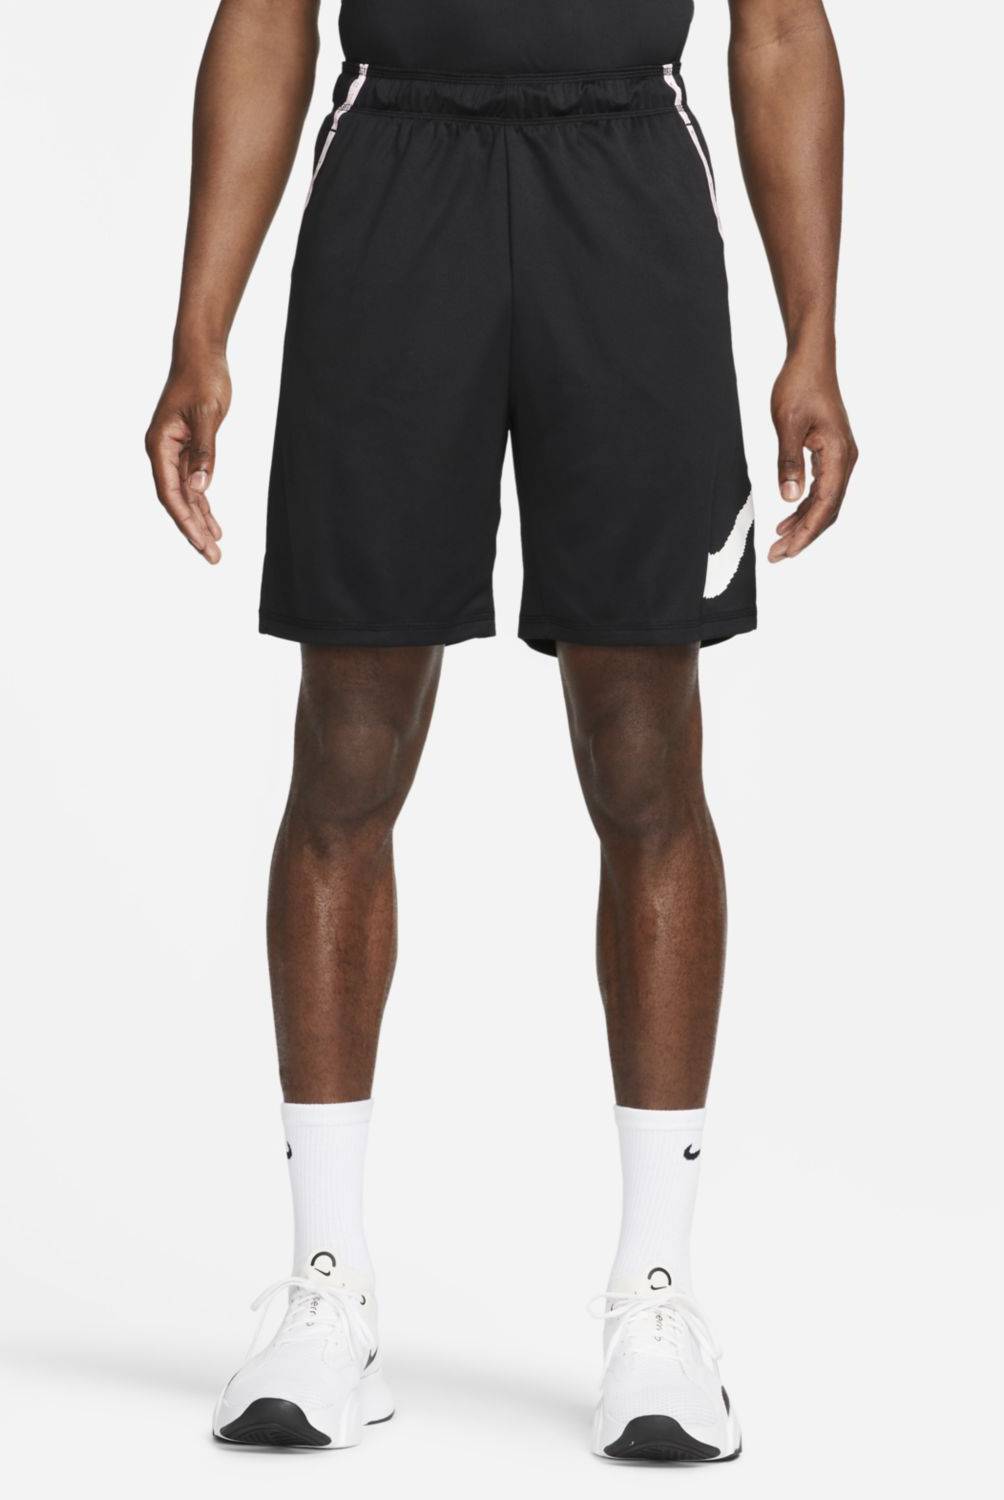 Nike - Nike Shorts Deportivo Fitness Hombre